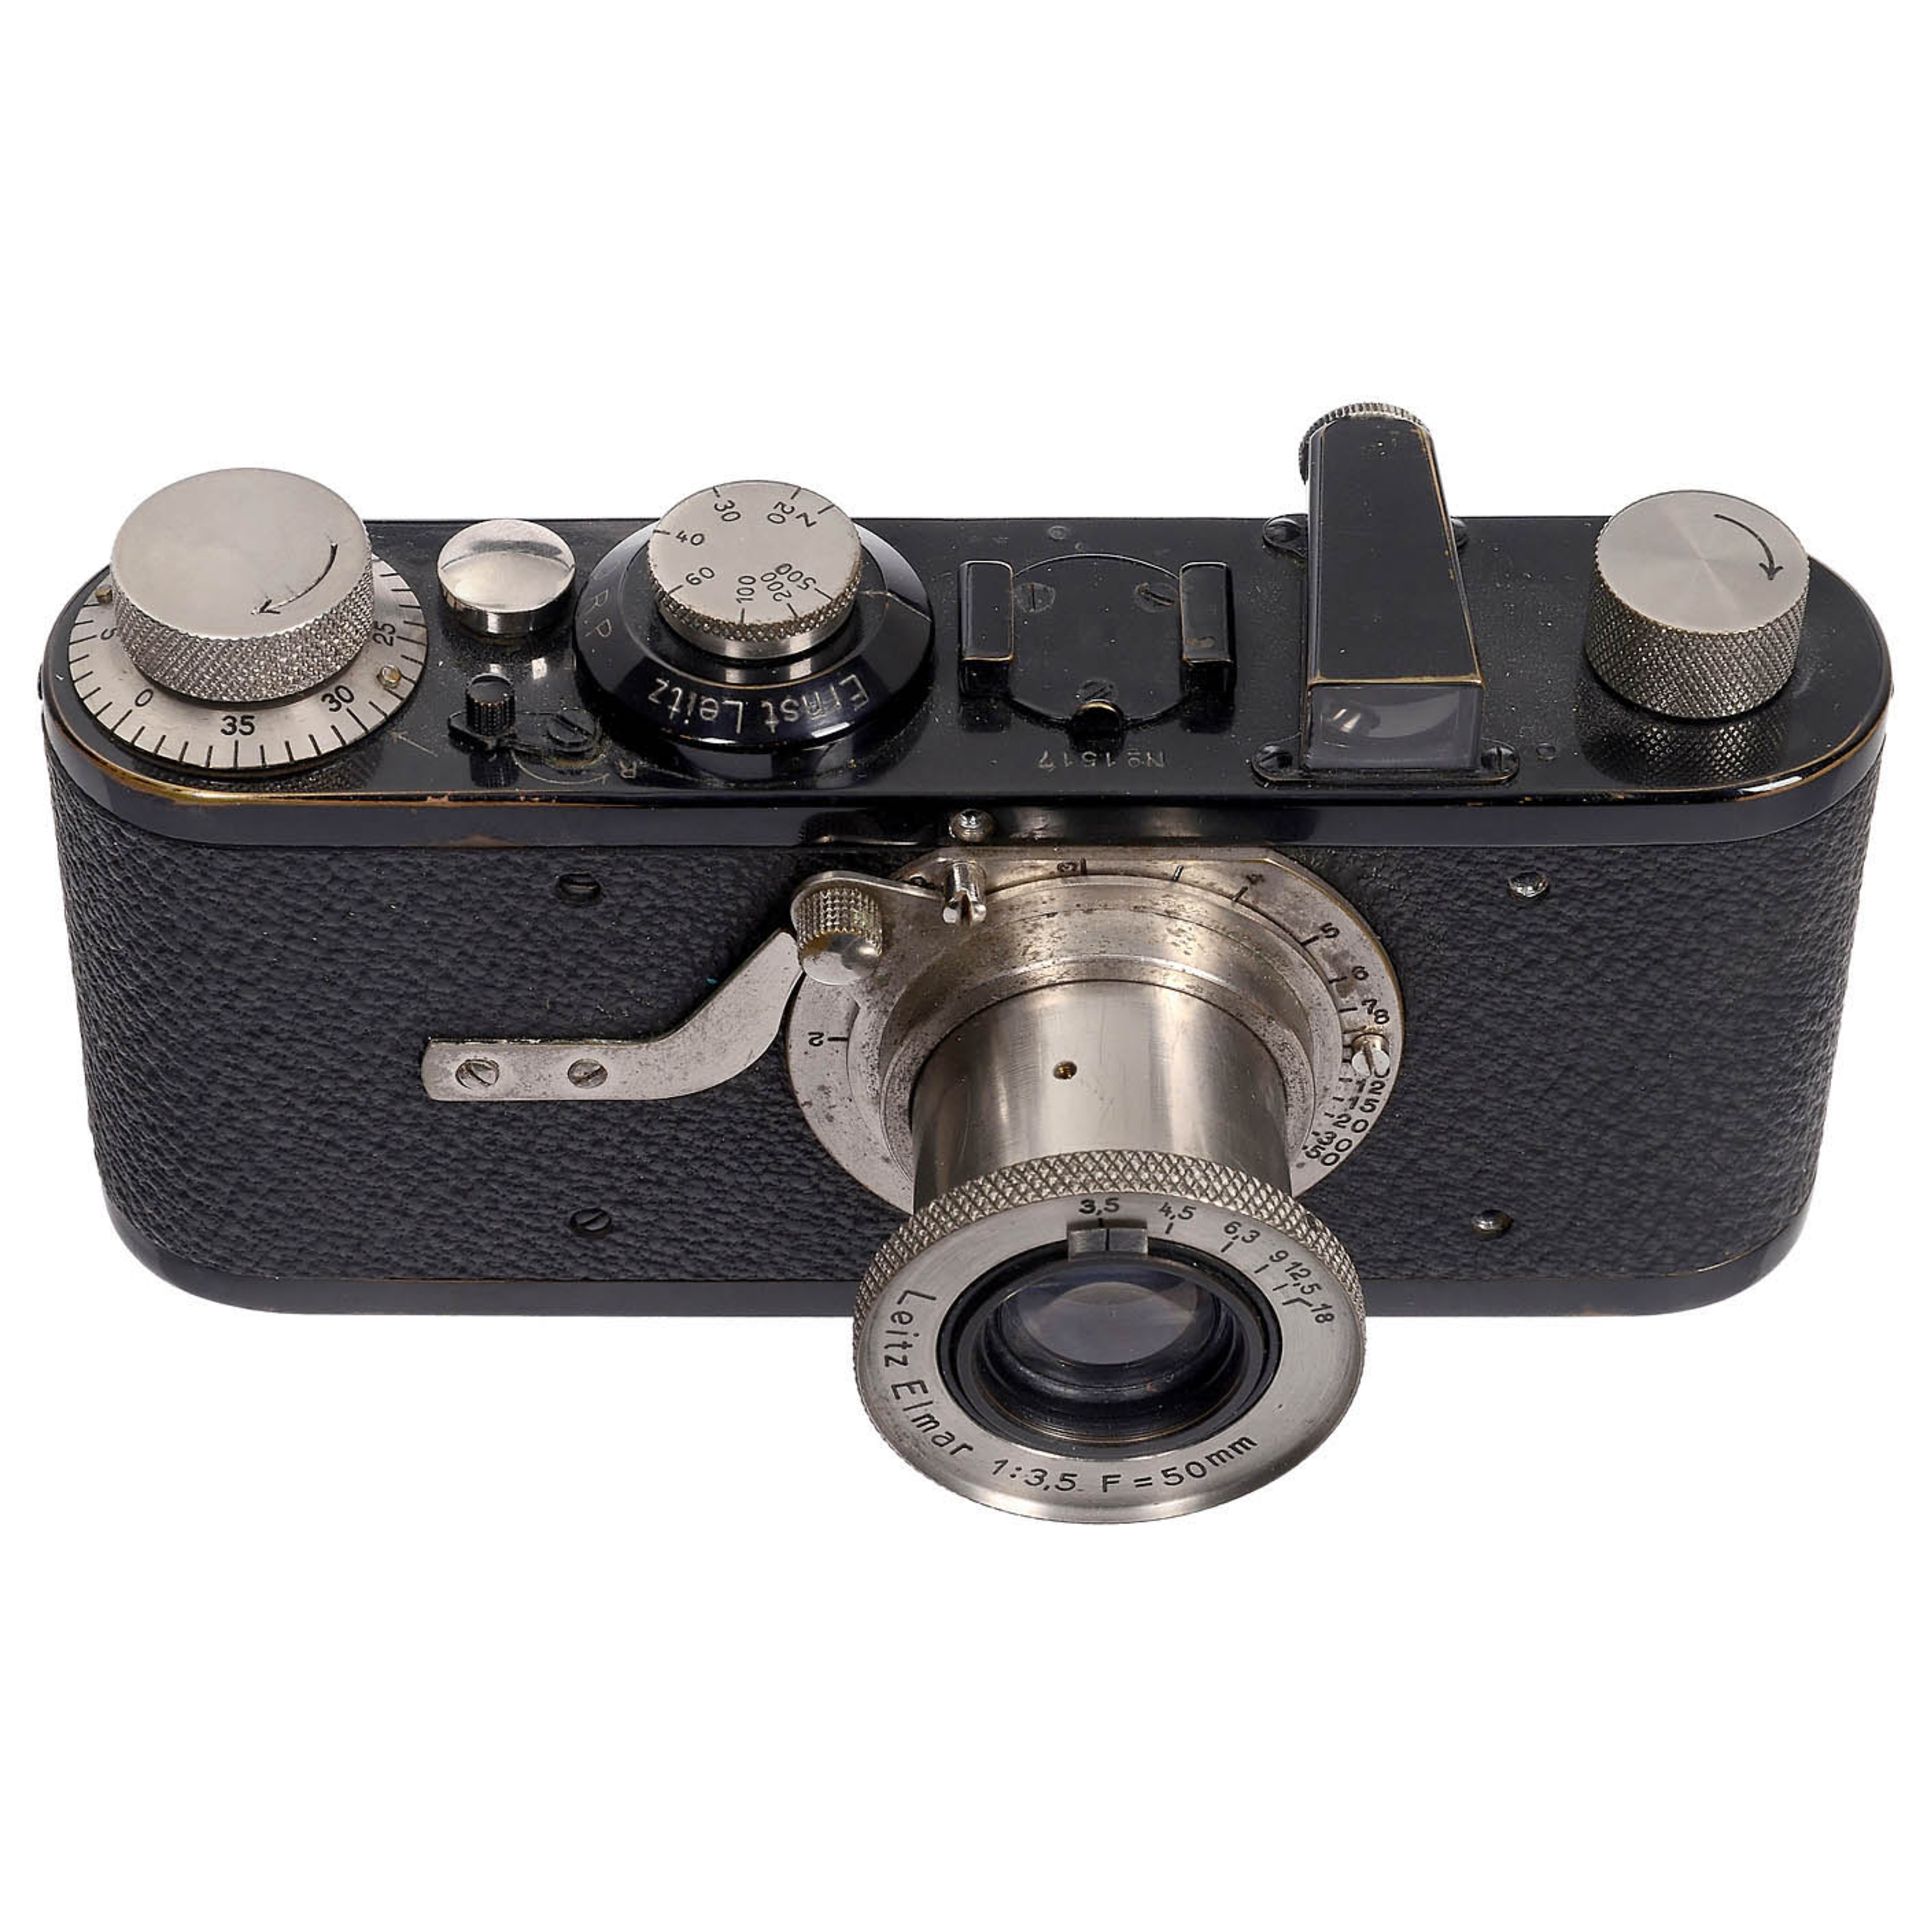 Leica I Camera with FODIS, c. 1926 - Image 2 of 3